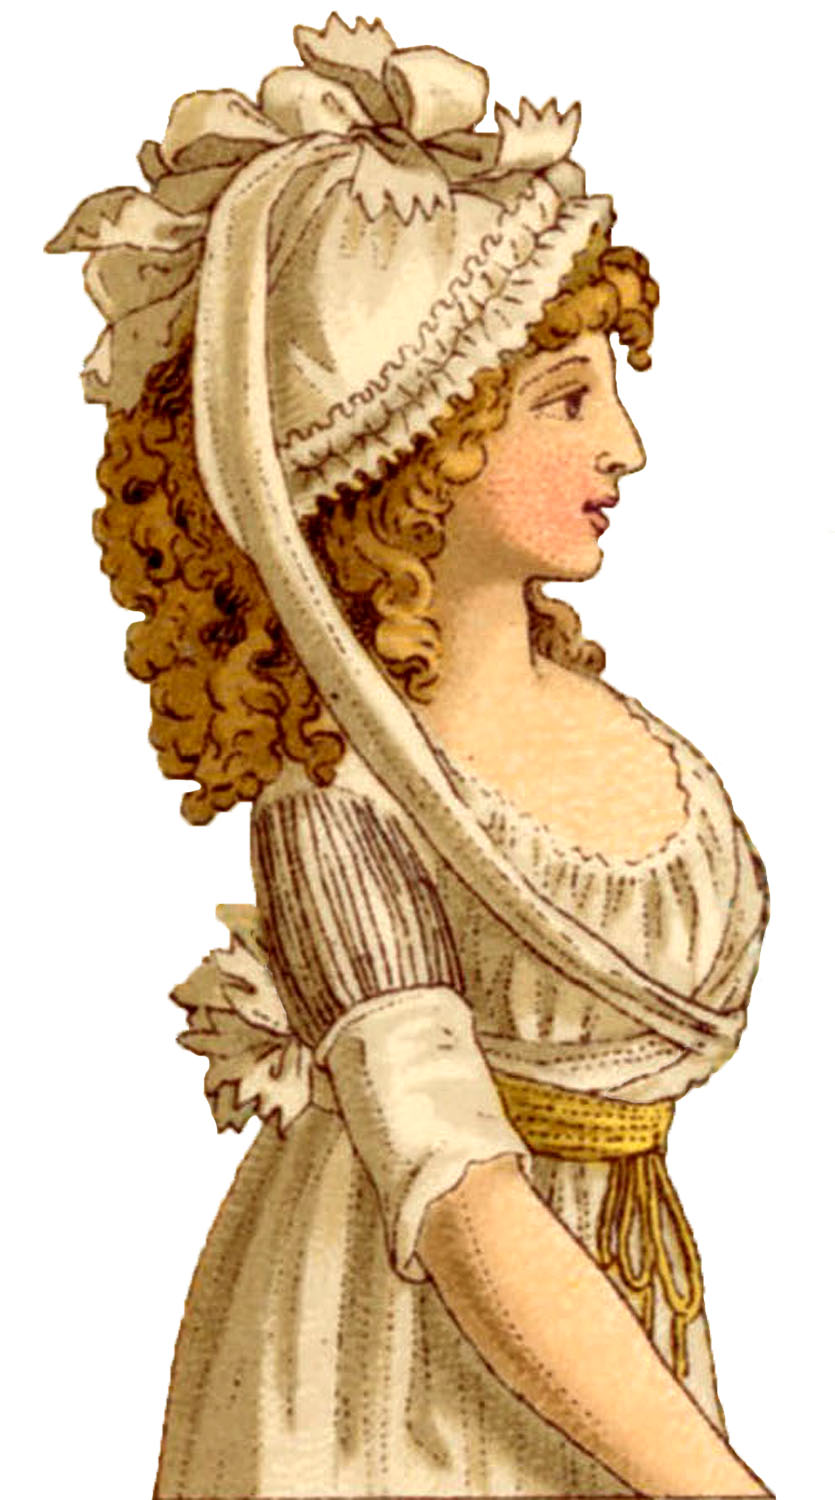 The Empress Eugénie in 18th-century costume 